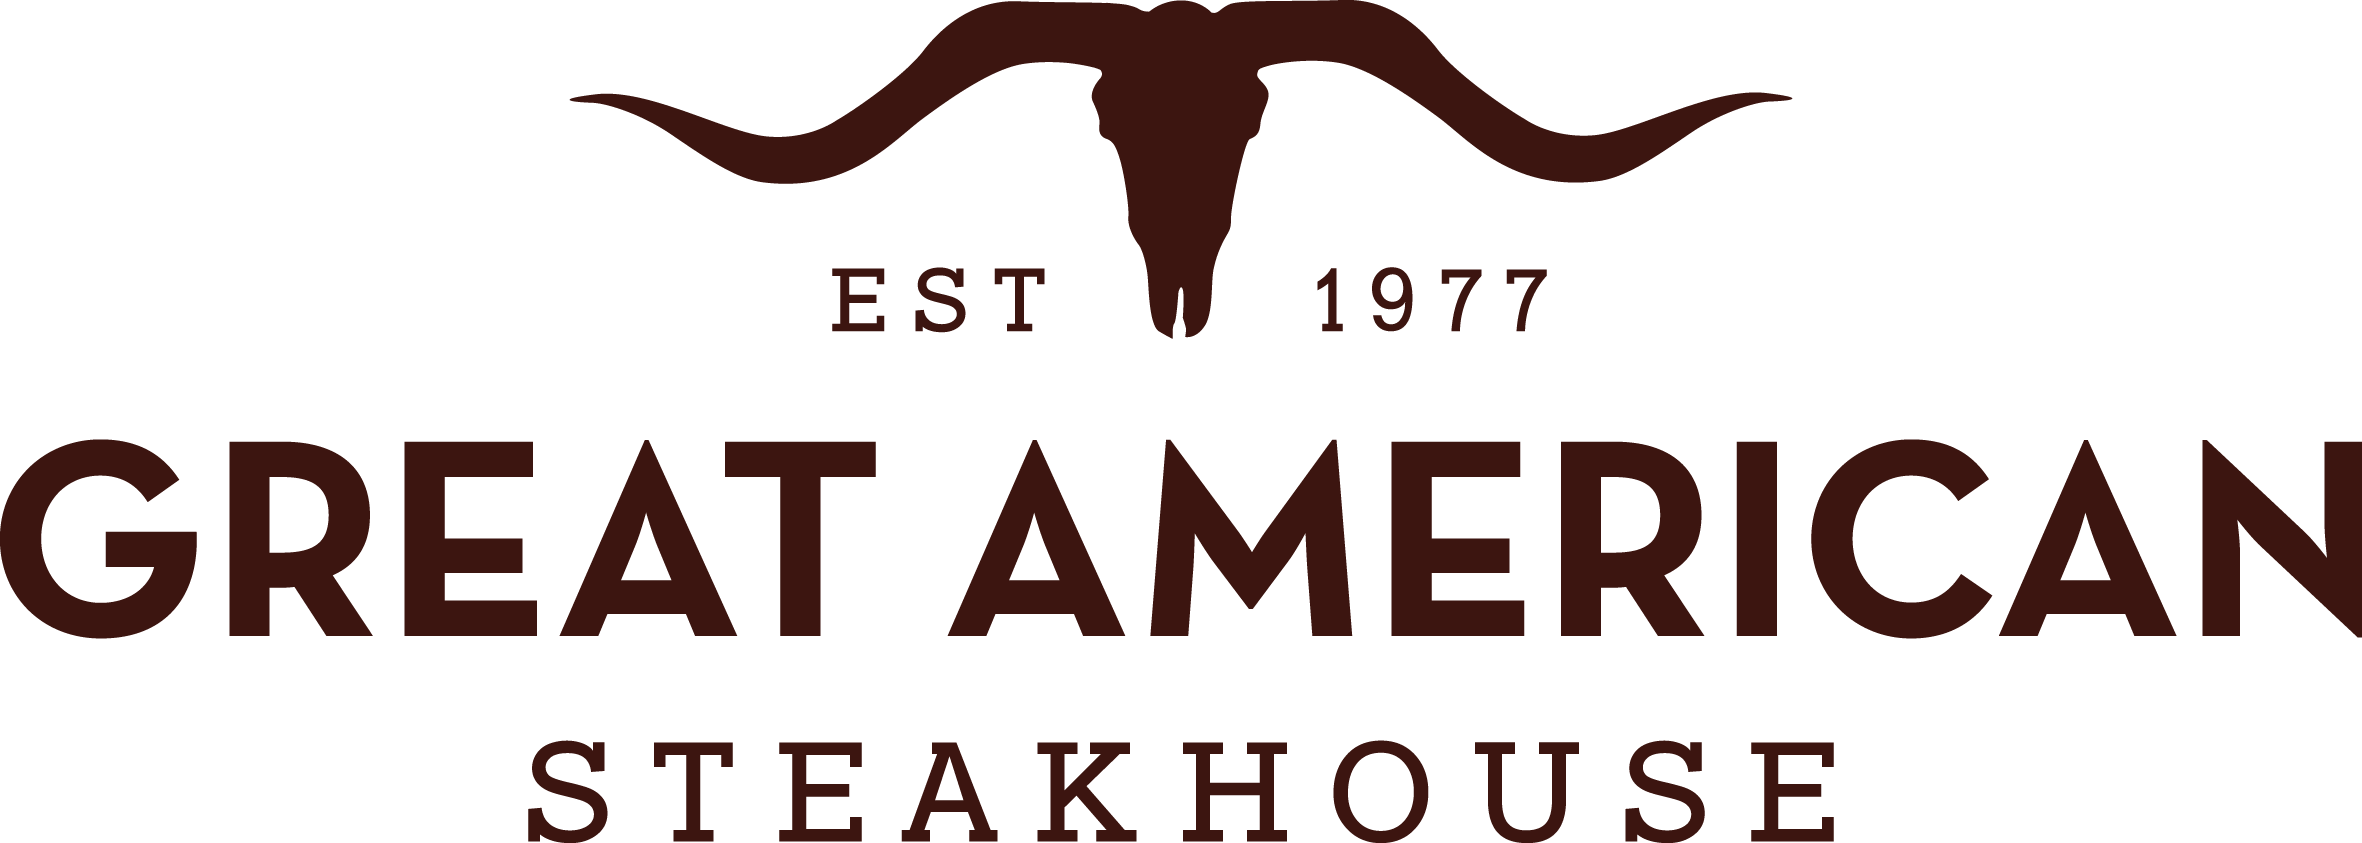 Great American Steak House logo